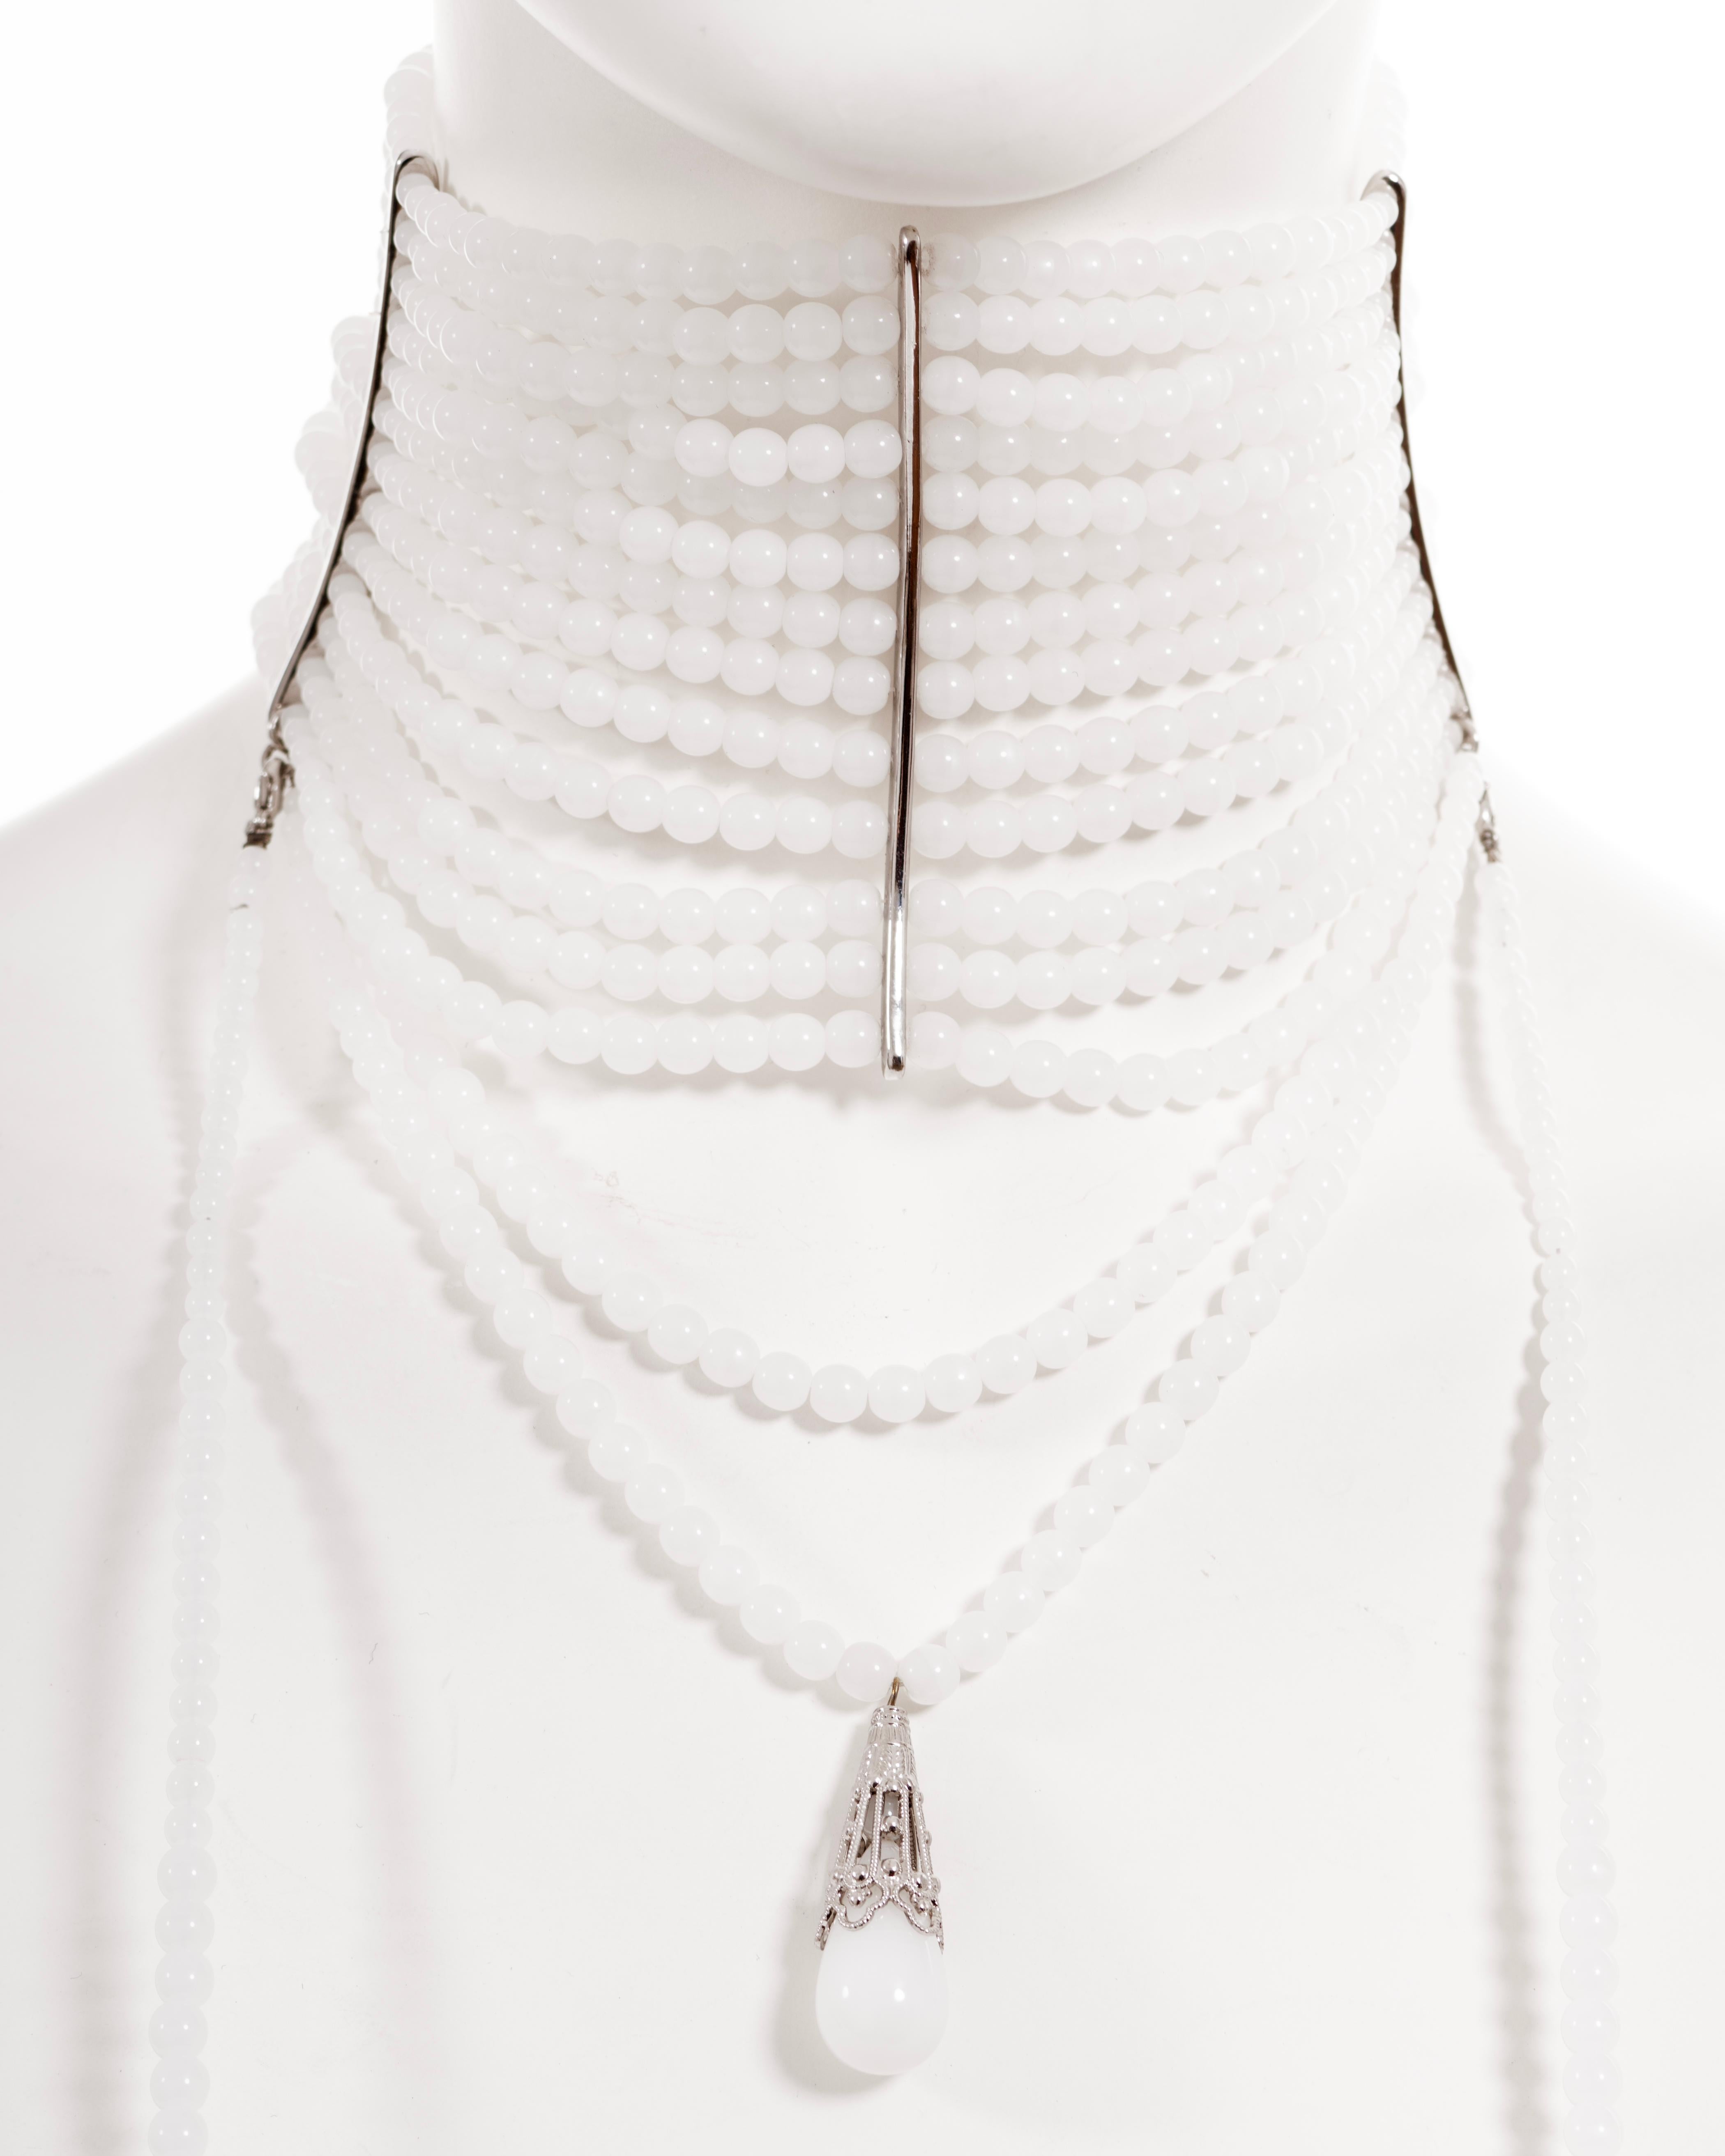 Women's Christian Dior by John Galliano white beaded Masai choker necklace, fw 1998